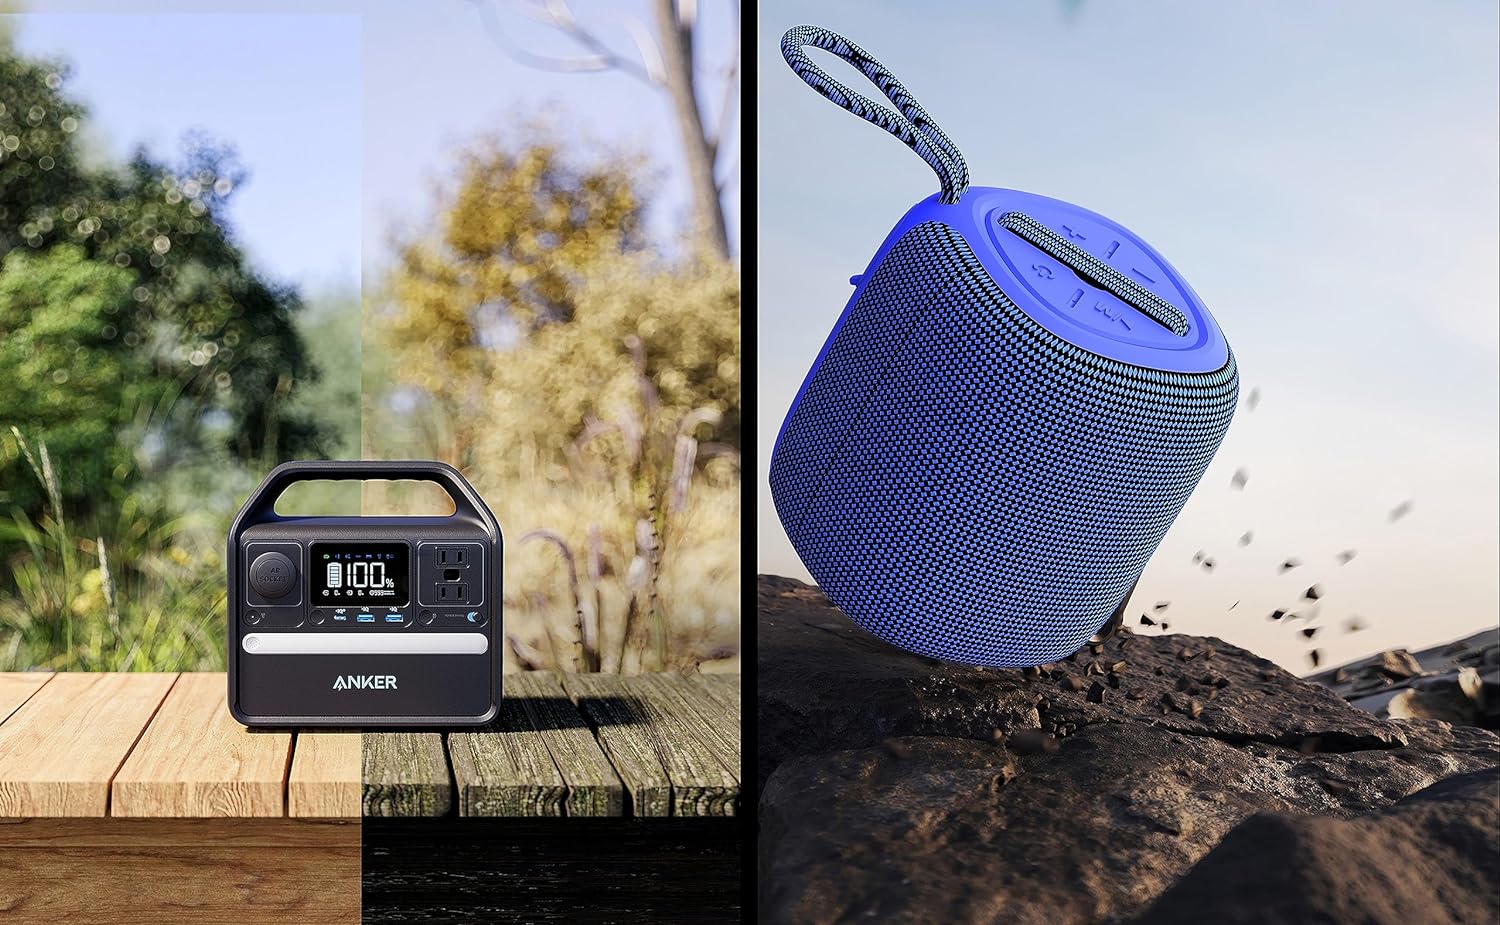 YOLOEMOT Protable Bluetooth Speakers, 10Hrs Playtime, T15 Small Waterproof Speaker, Wireless Speaker Support TF Card, Mini Speaker for Home, Travel, Gift